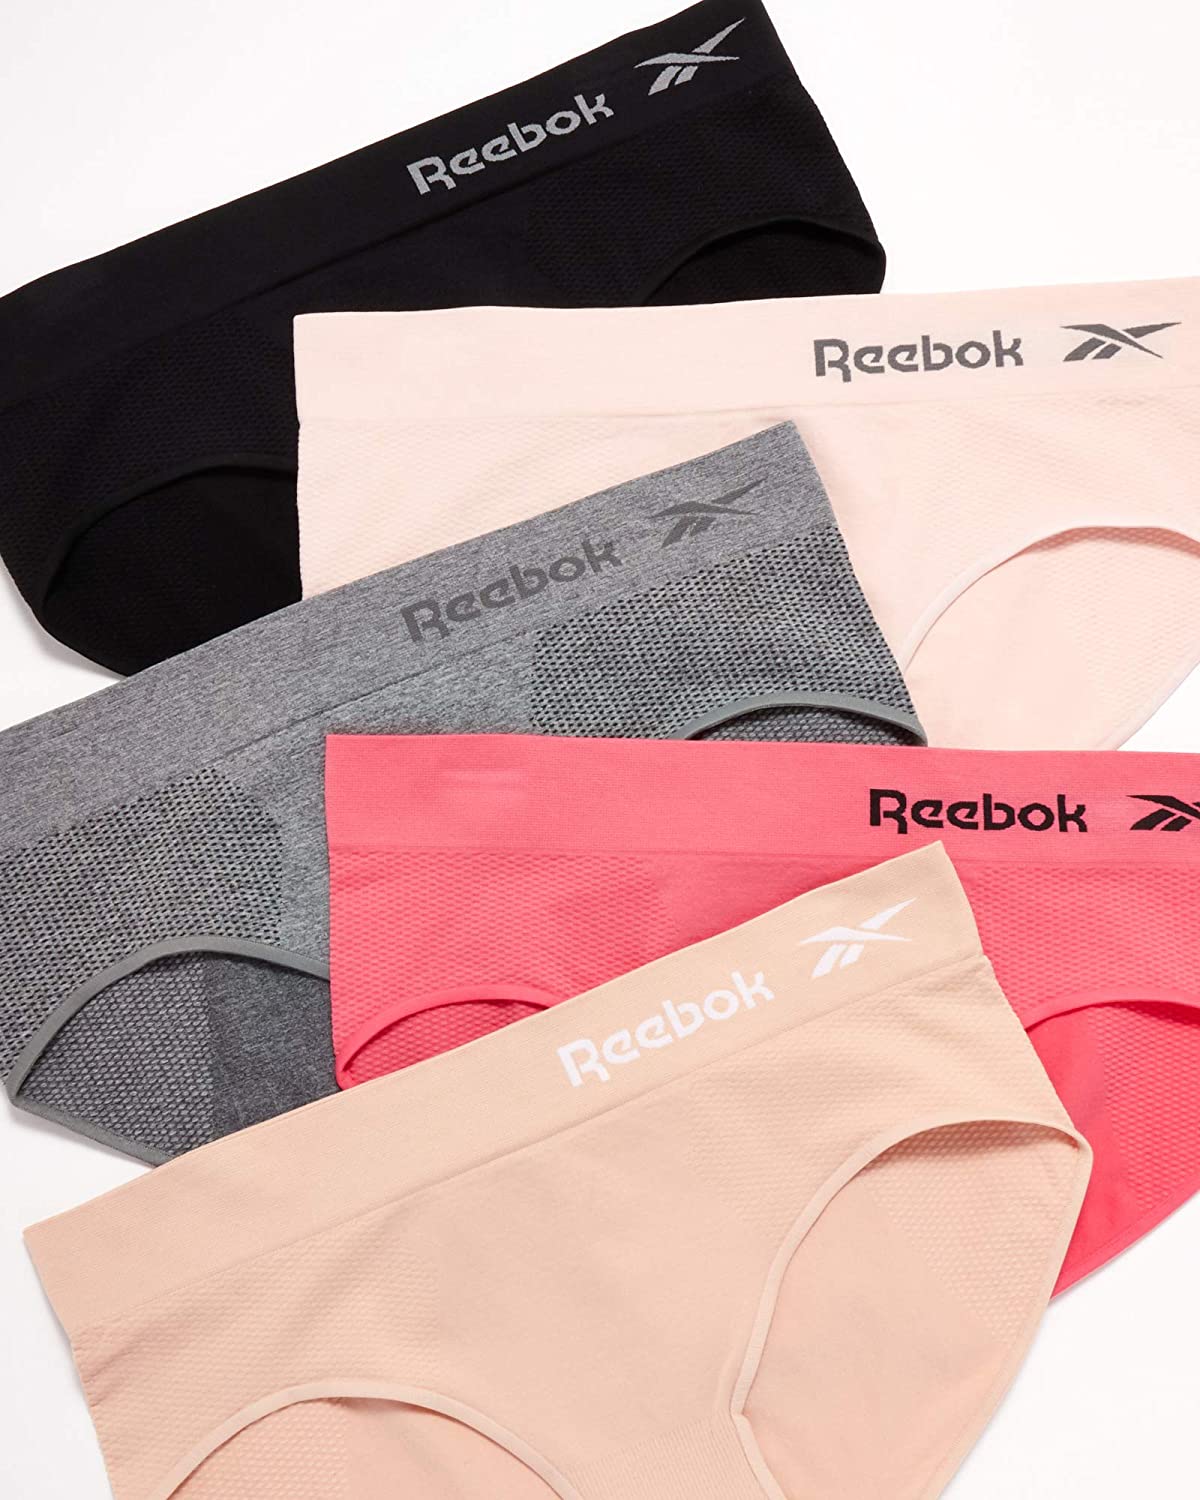 Reebok Seamless Thong for Women - 5 Pack